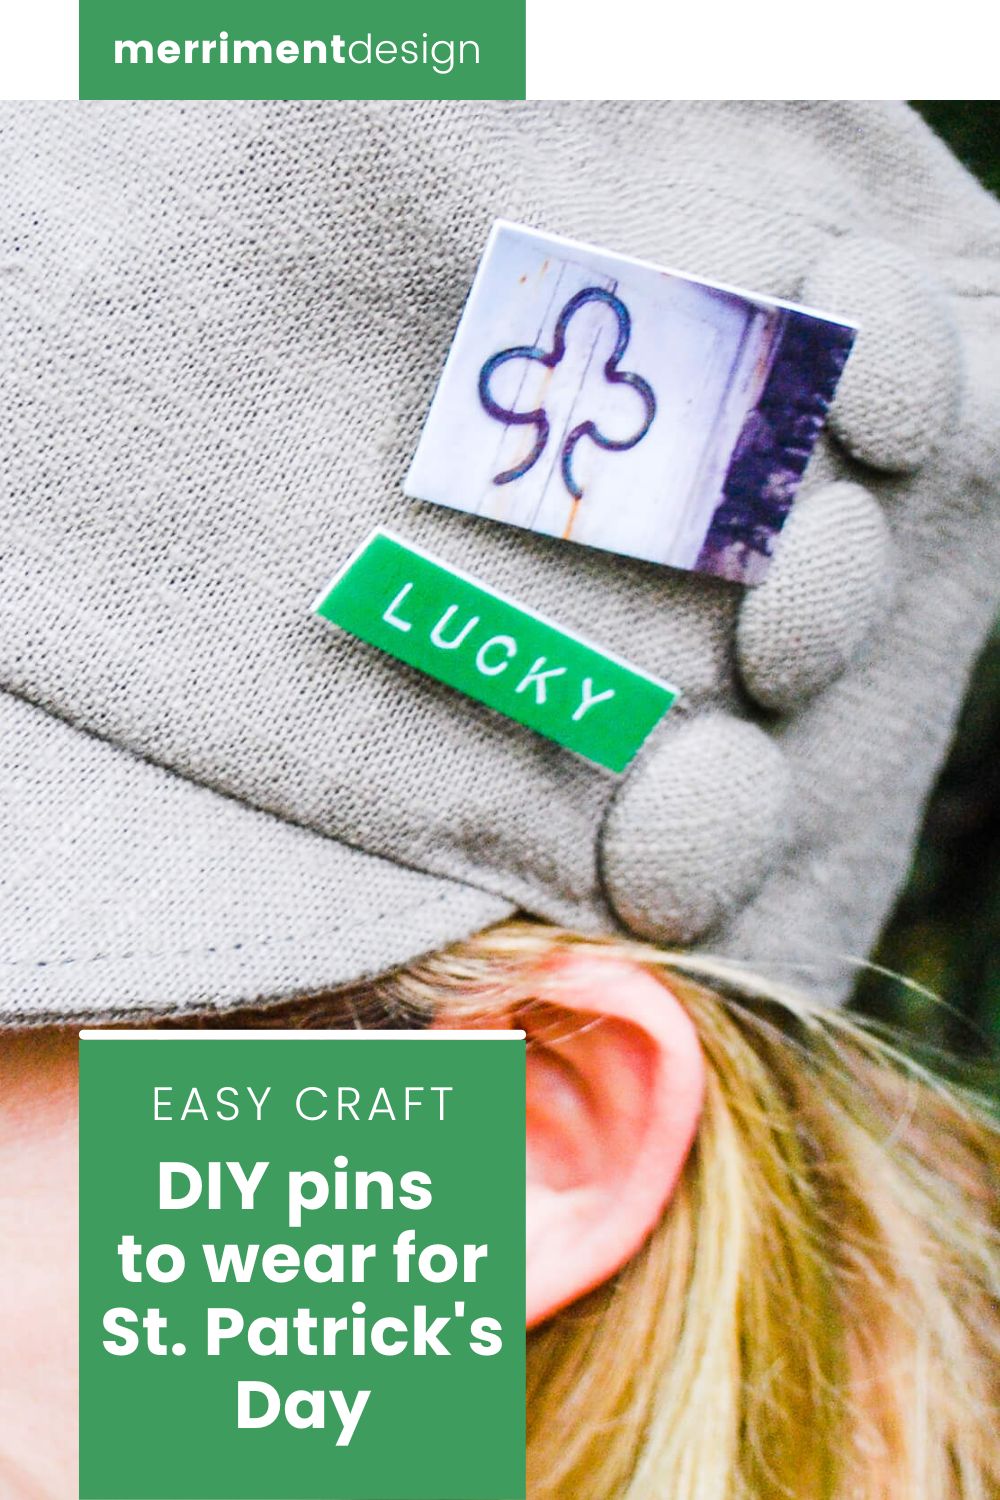 Easy St. Patrick’s Day craft idea - make Irish pins from Shrinky Dinks